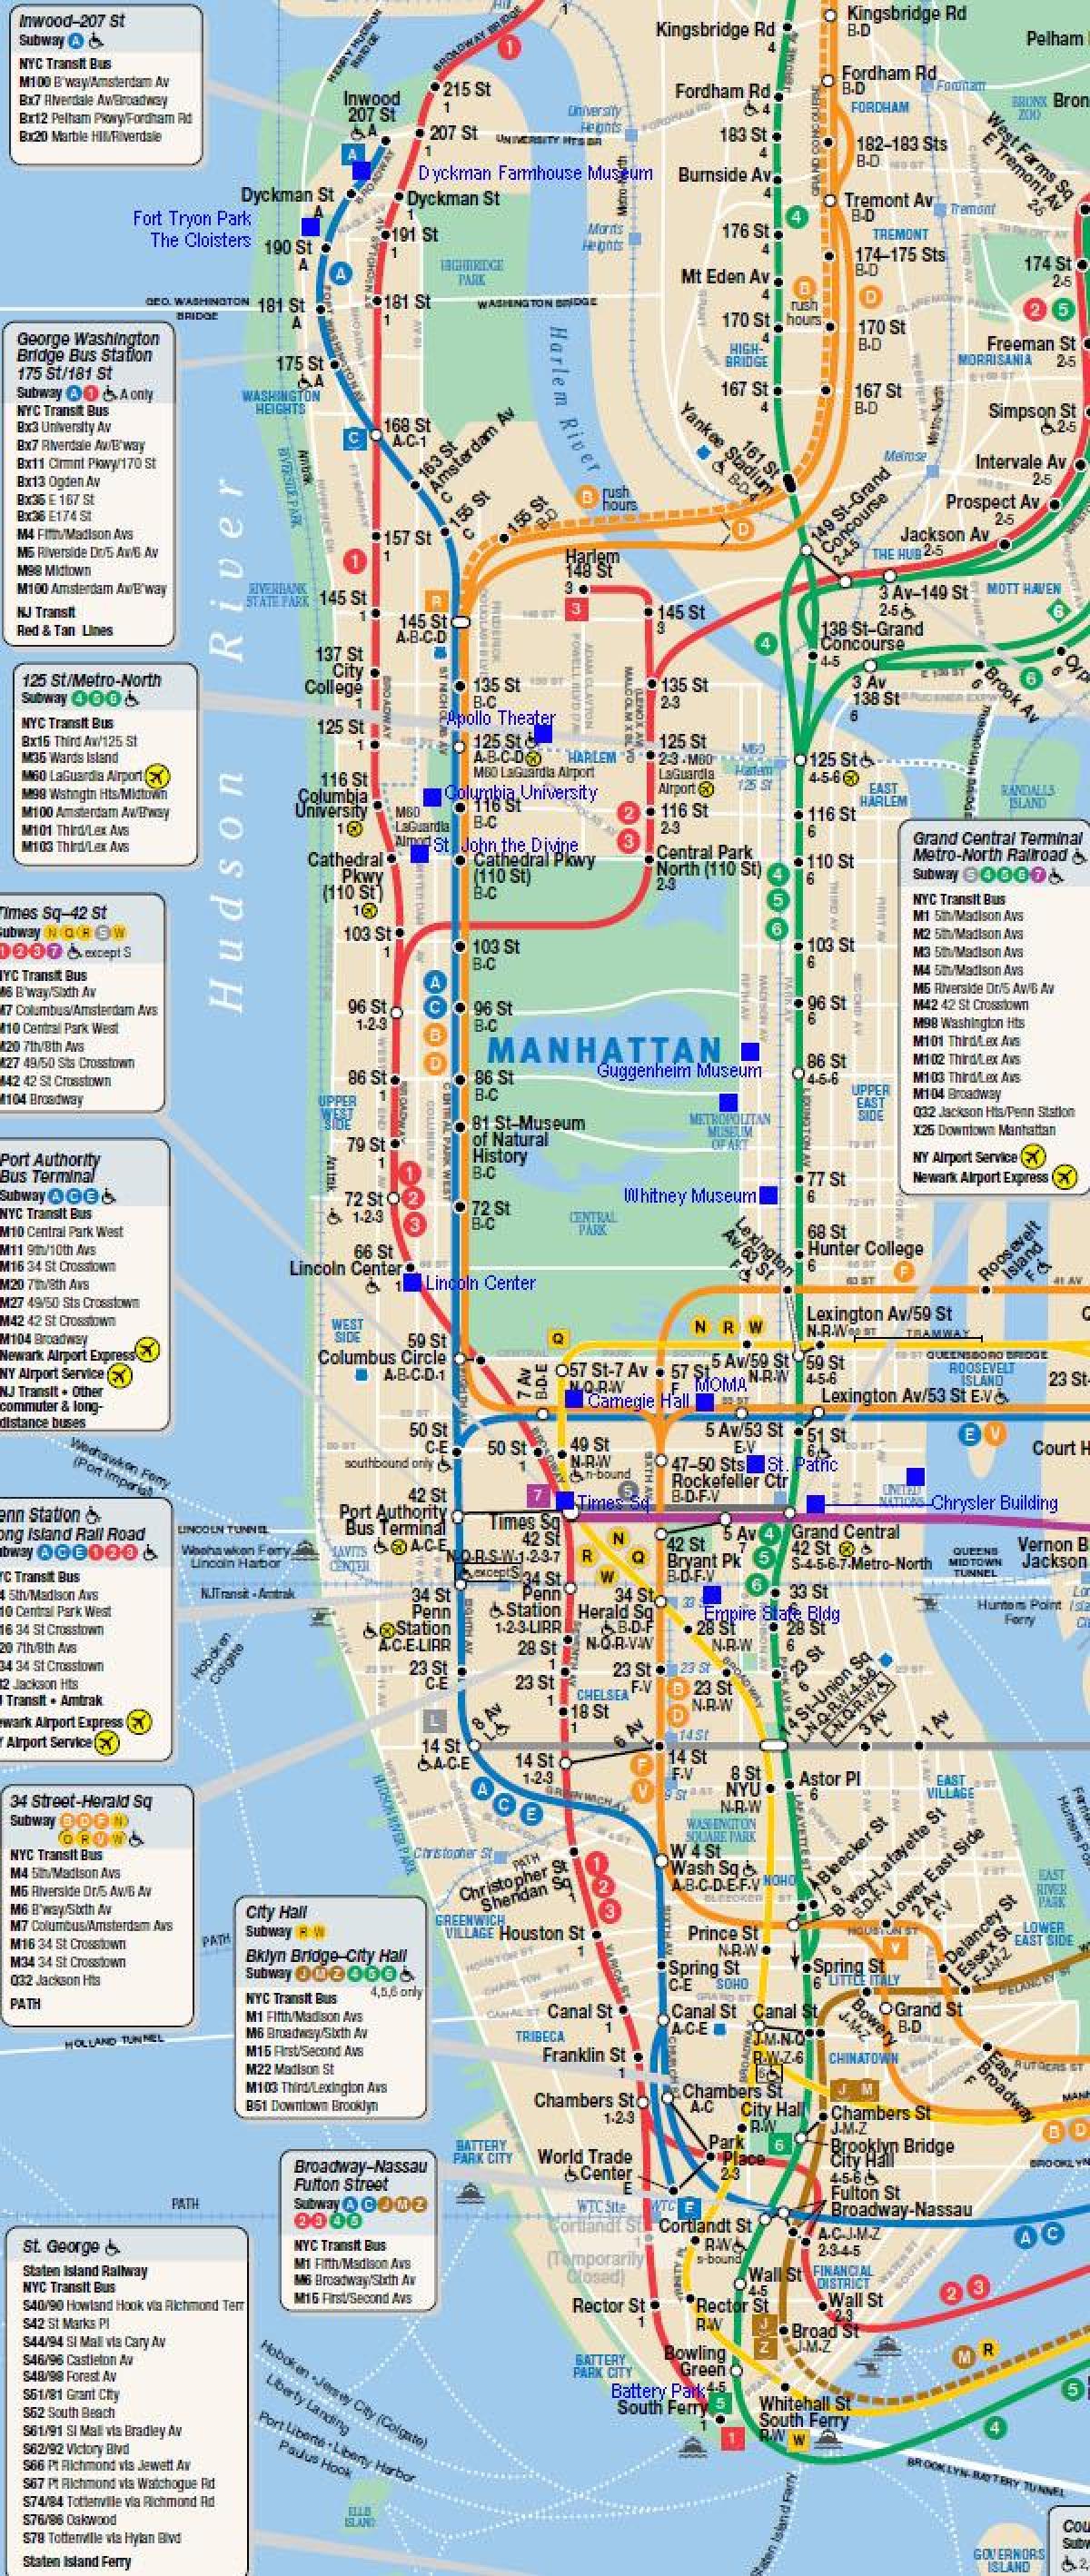 Manhattan ferroviario mapa